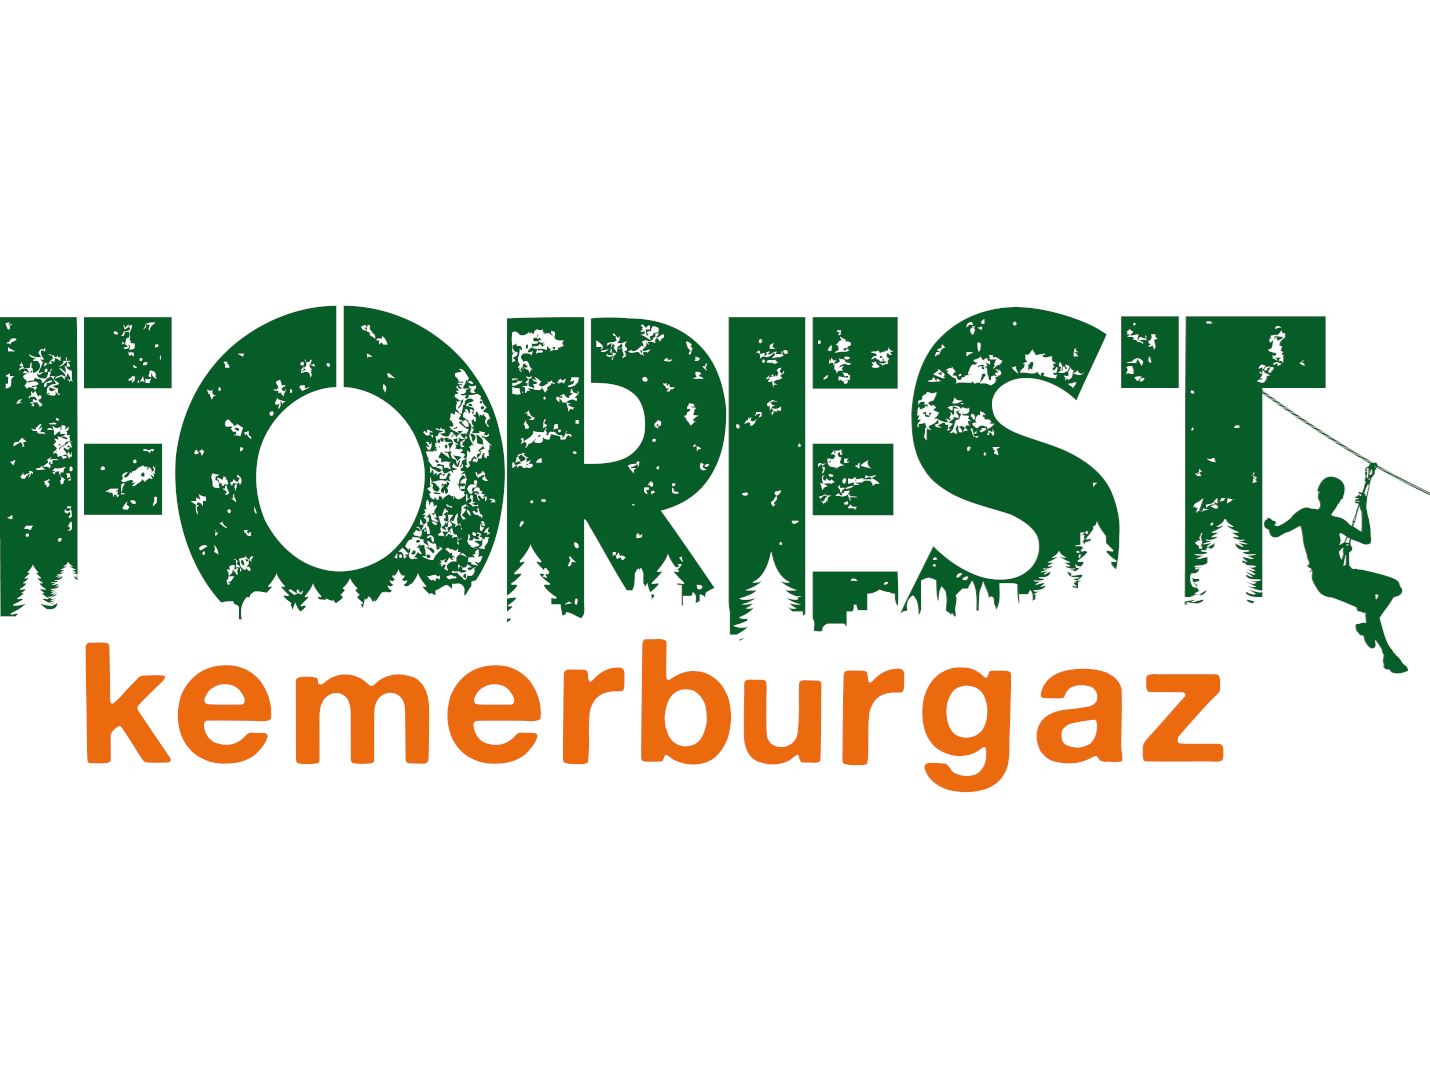 Forest Kemerburgaz Nature and Adventure Park